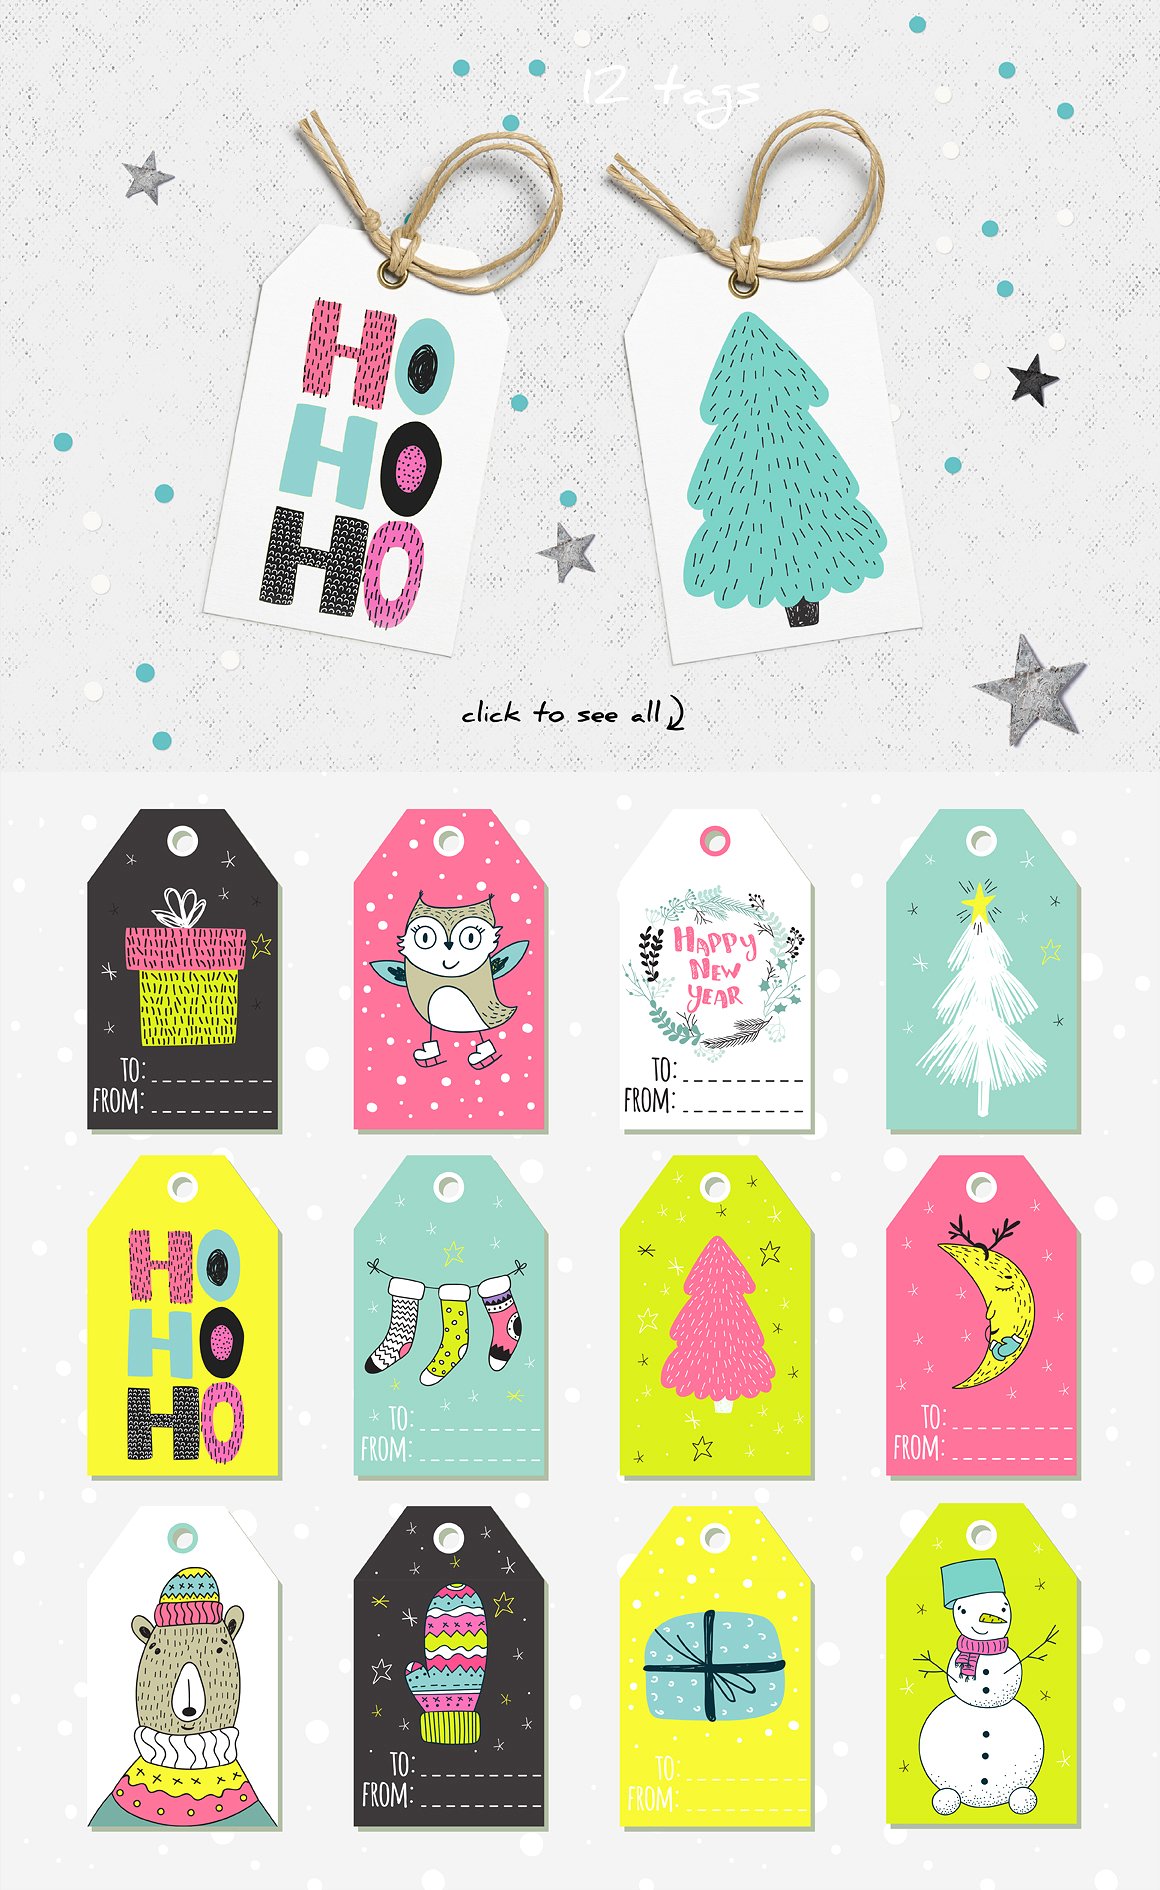 酷炫的圣诞节假日手绘图案集 Cool Christmas Holiday Hand Drawn Pattern Set插图4